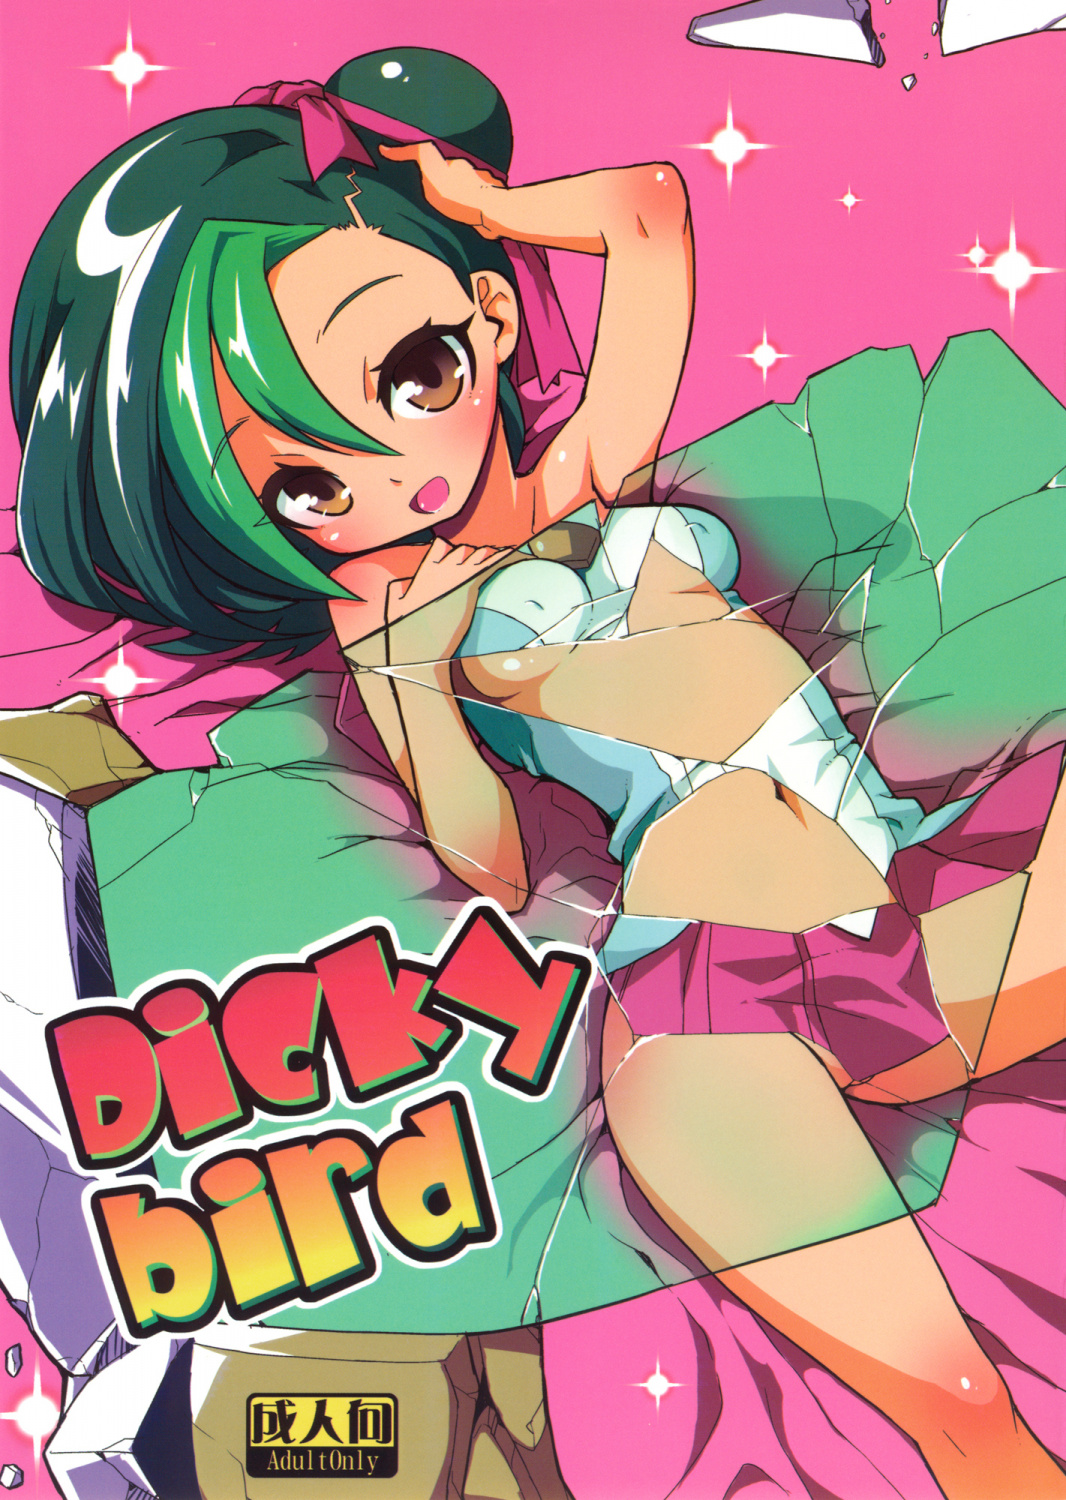 1066px x 1500px - Dicky bird - Multporn Comics & Hentai manga